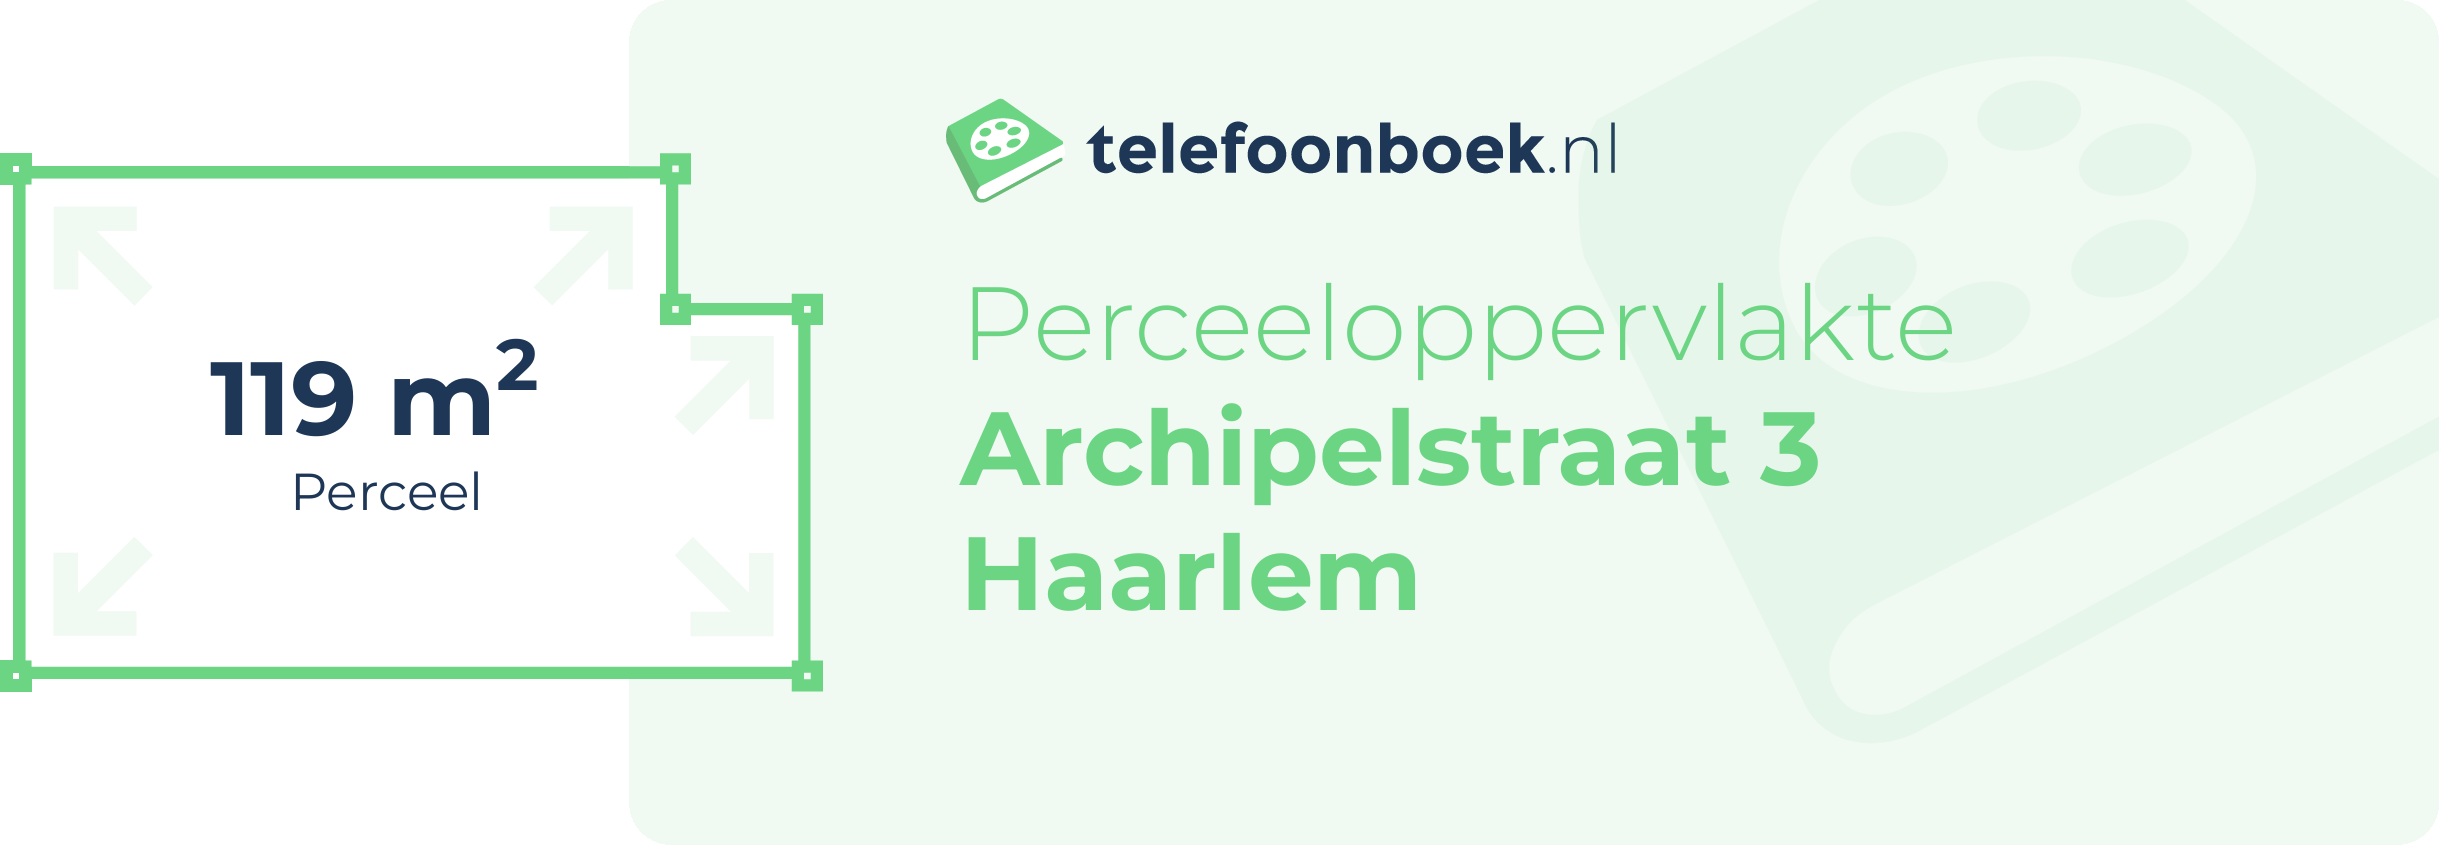 Perceeloppervlakte Archipelstraat 3 Haarlem